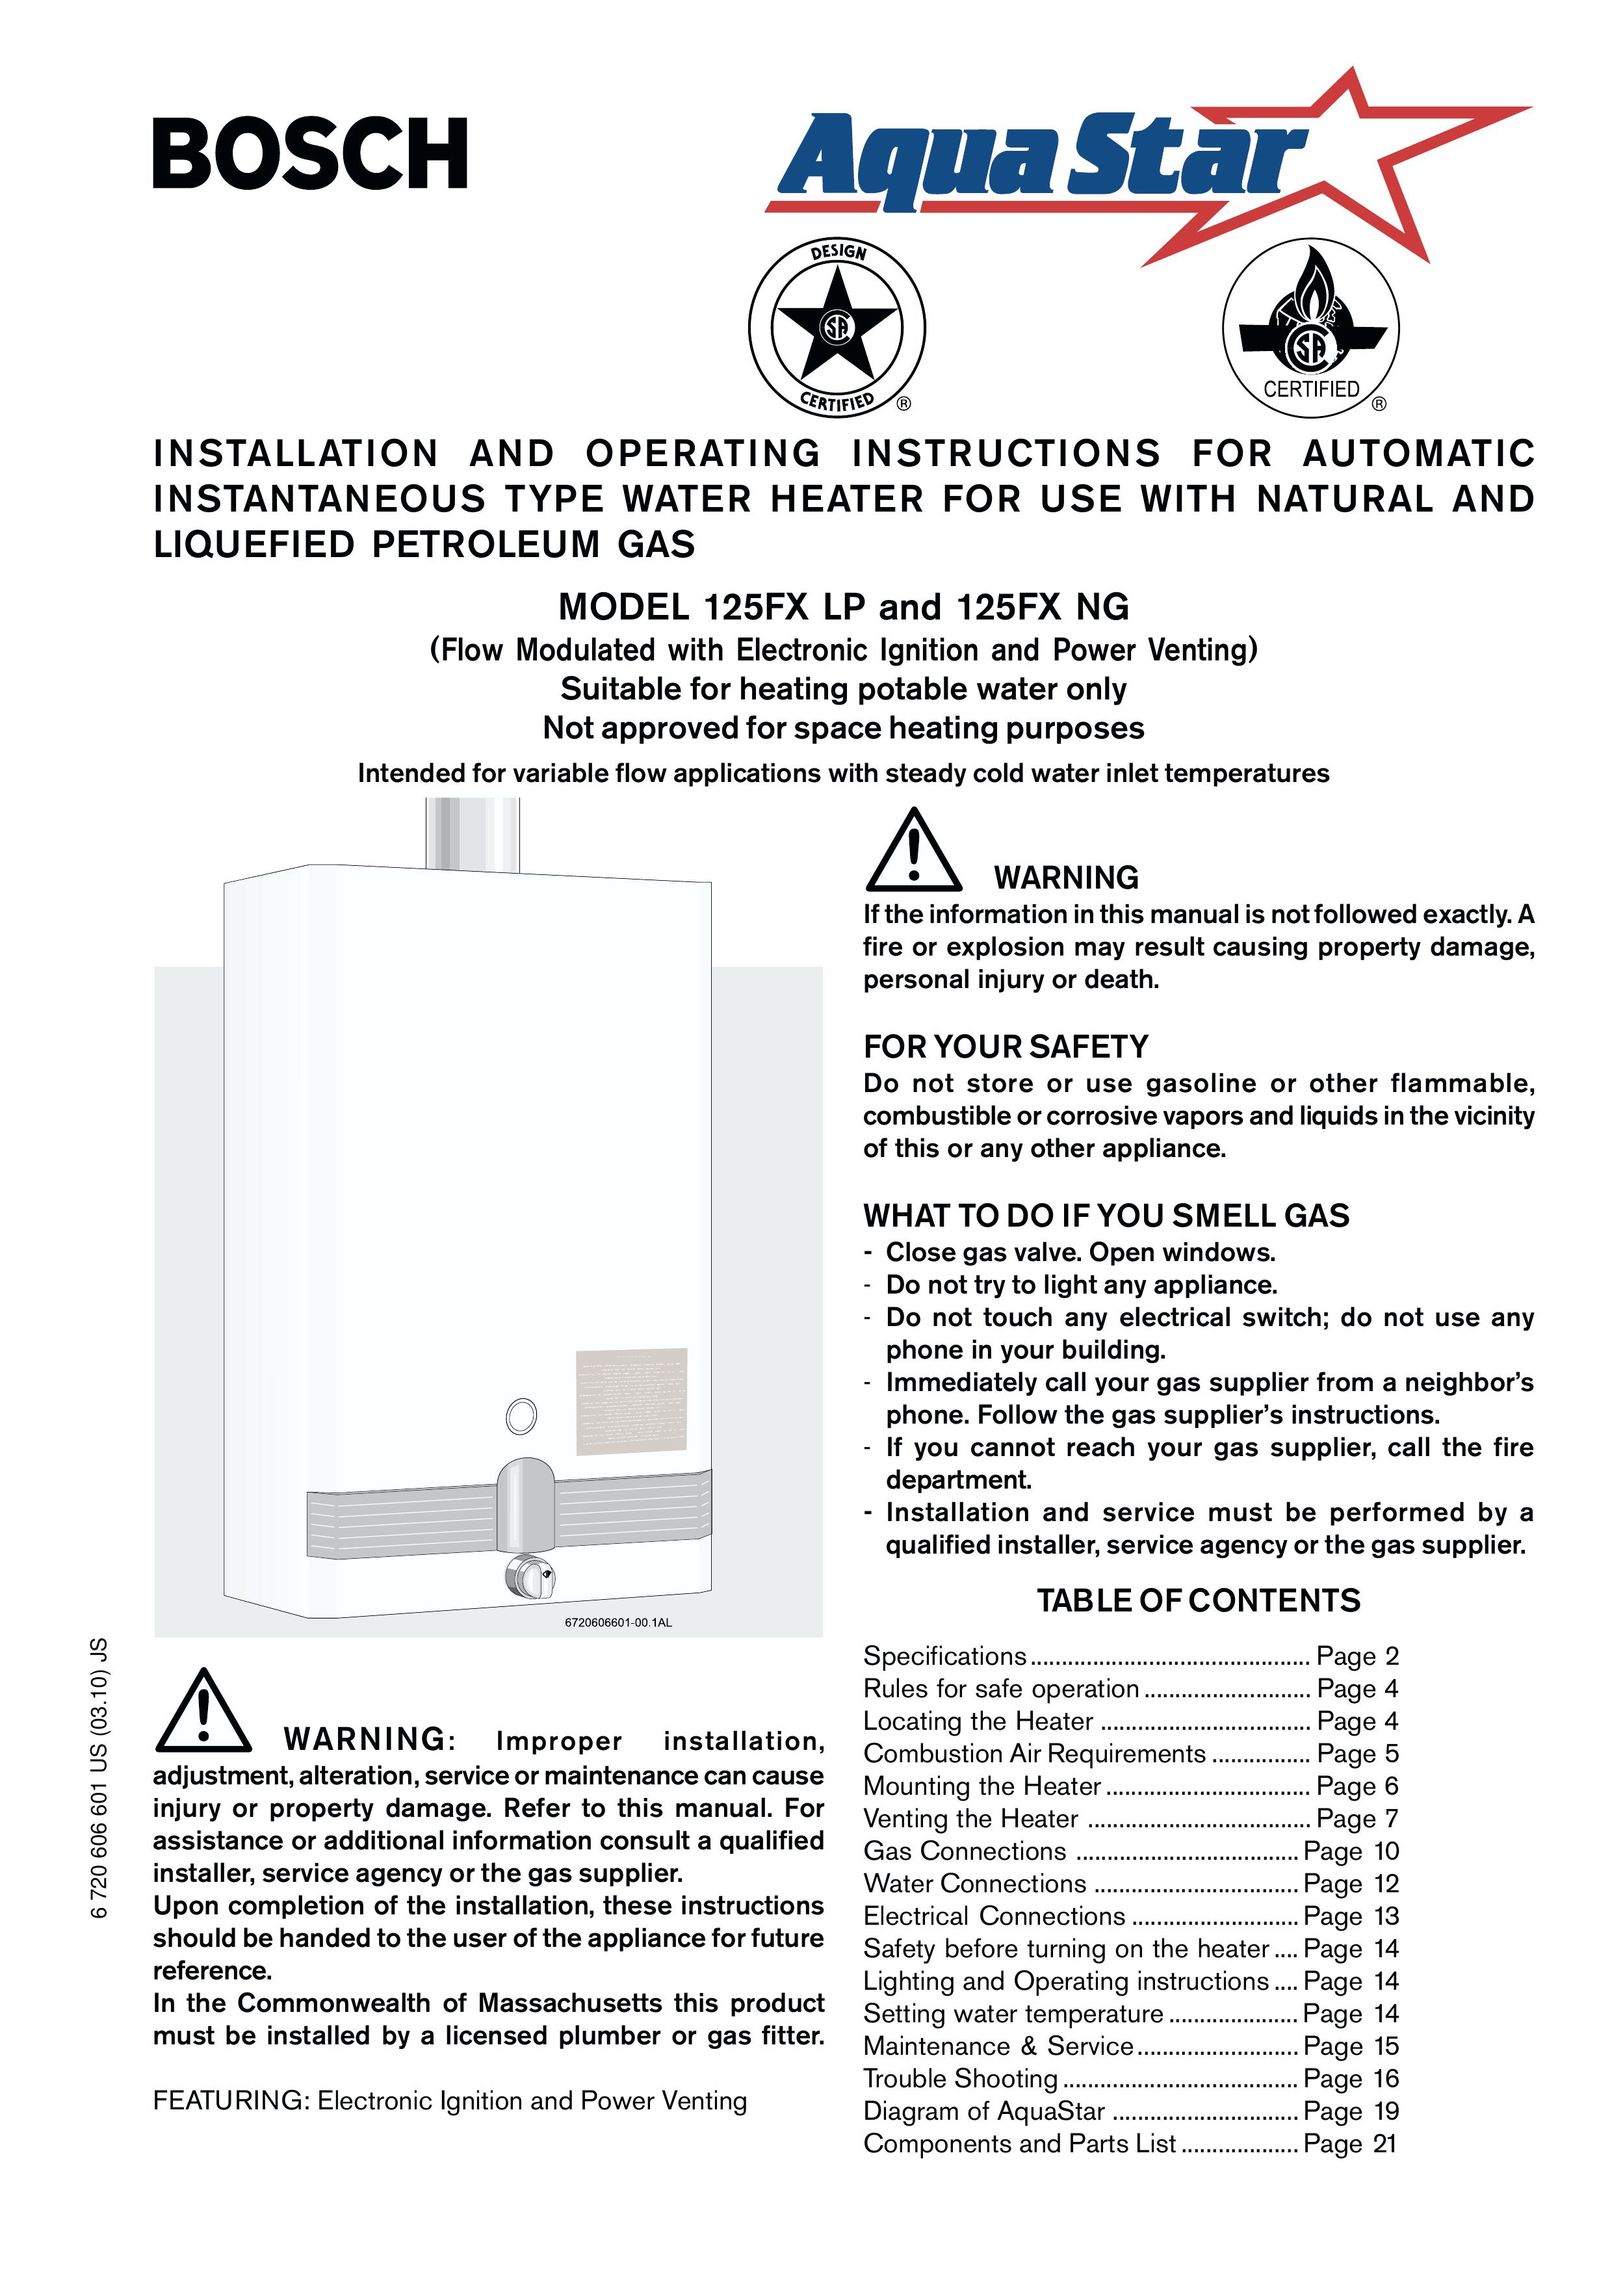 AquaStar 125FX NG Water Heater User Manual